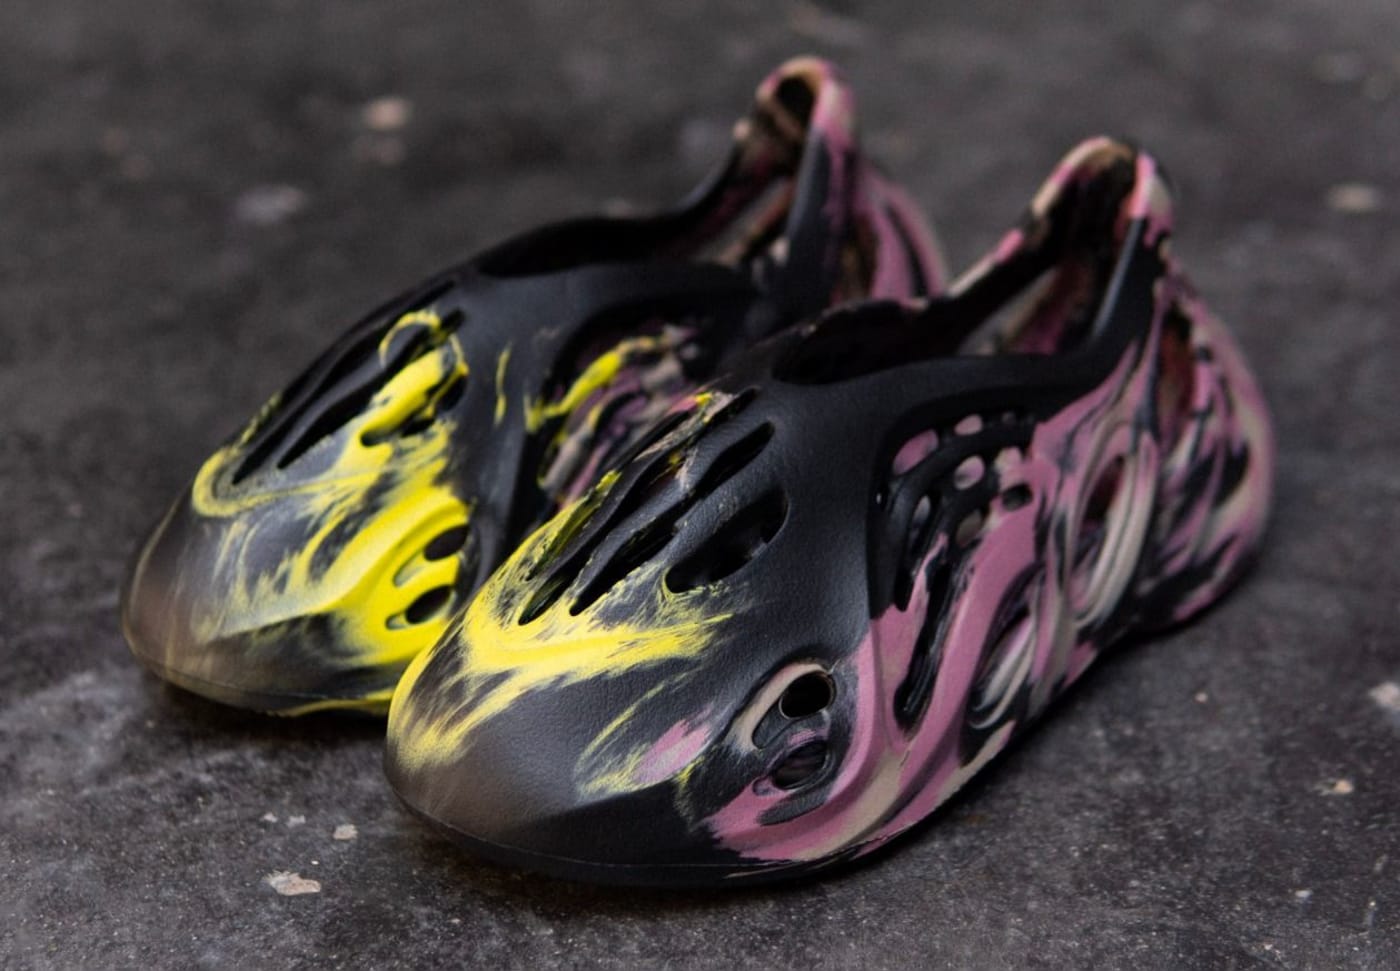 Adidas Yeezy Foam Runner 'MX Carbon' Pair